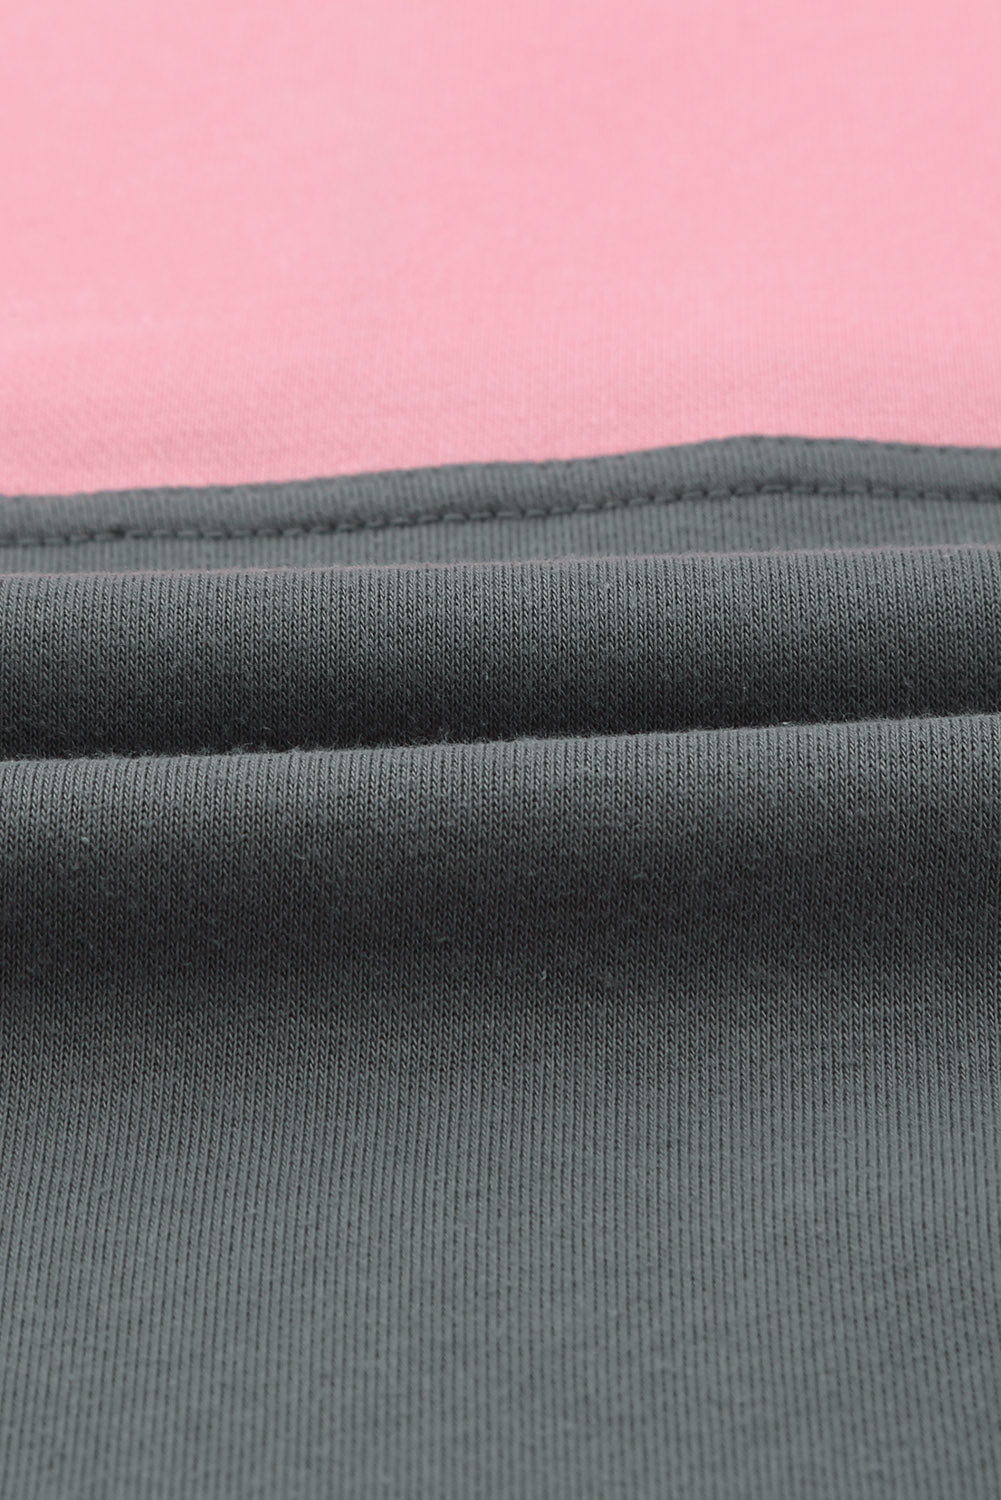 Black Zipped Colorblock Sweatshirt with Pockets